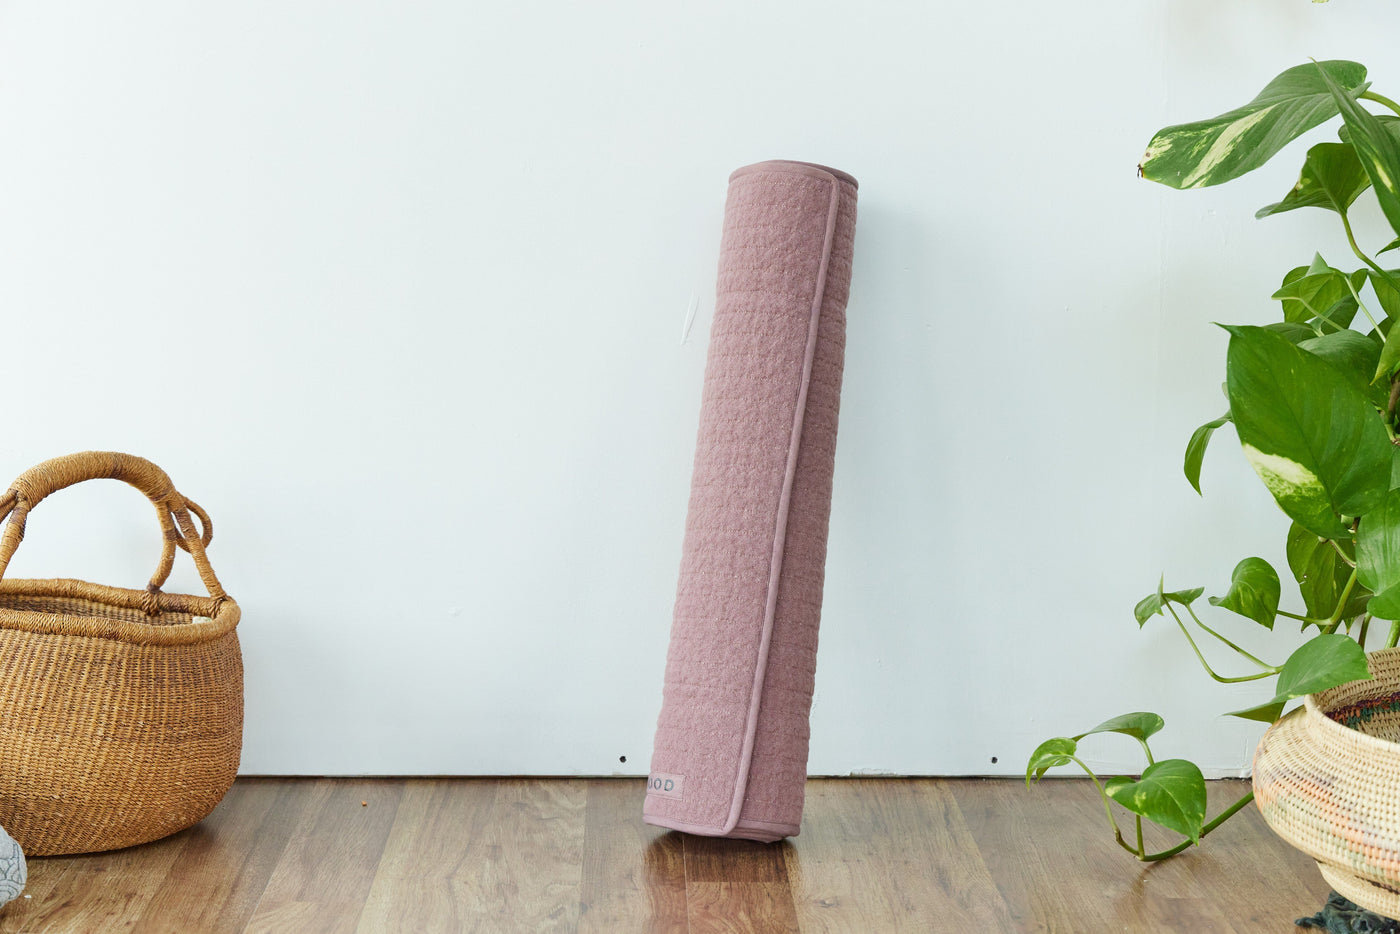 Free Shipping Worldwide - Yoga Mat Gift Idea - Cute Sloth - Thick